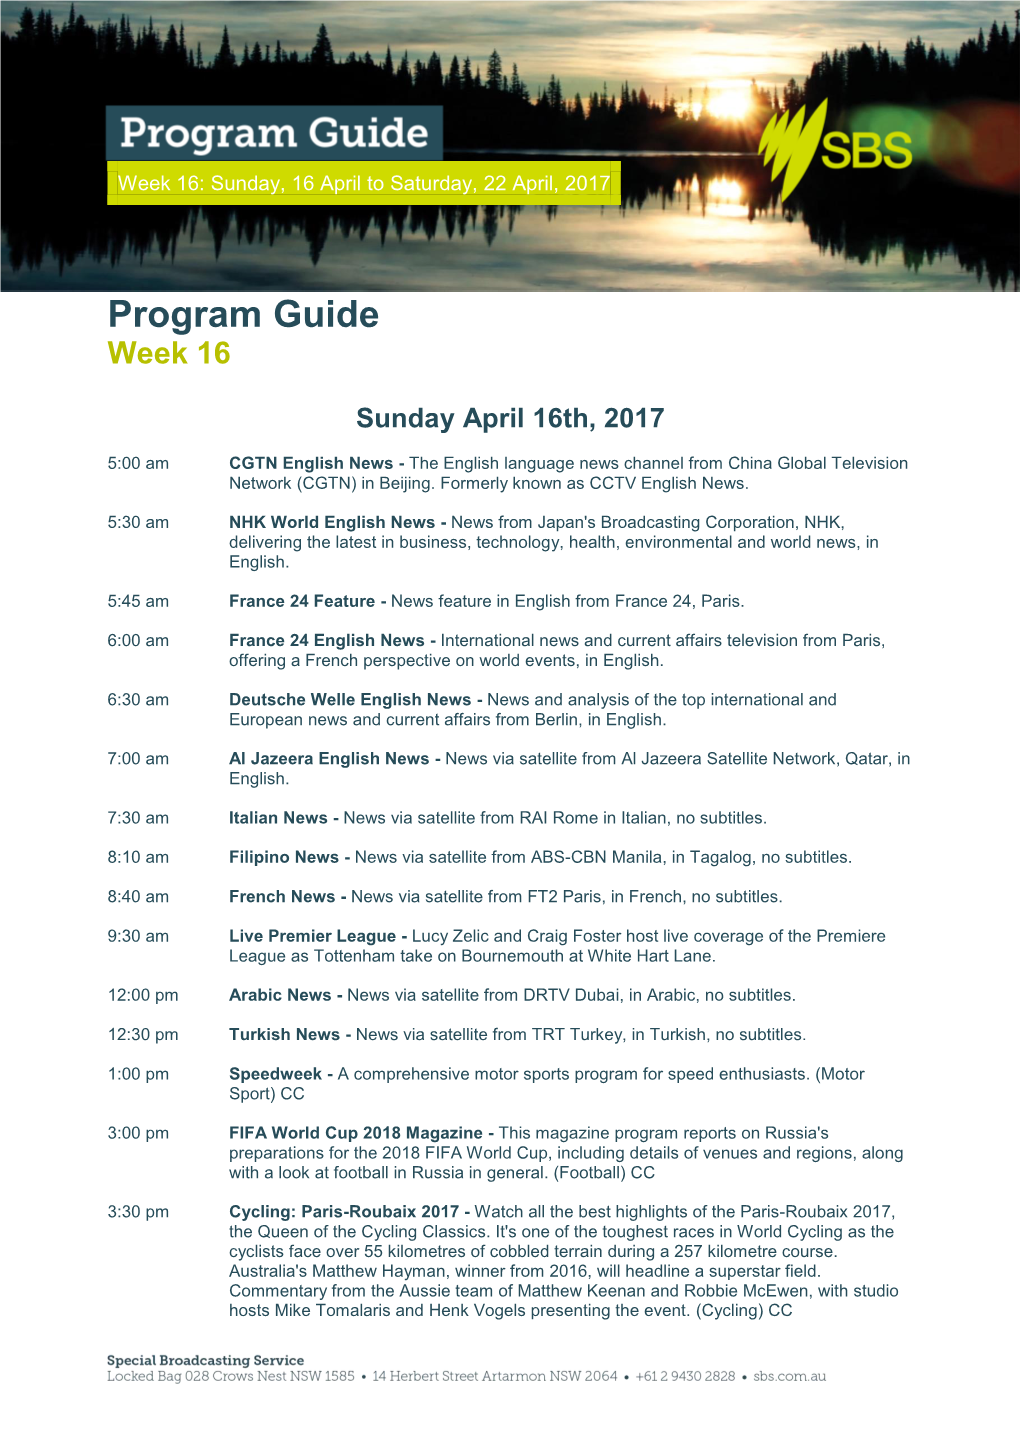 Program Guide Week 16